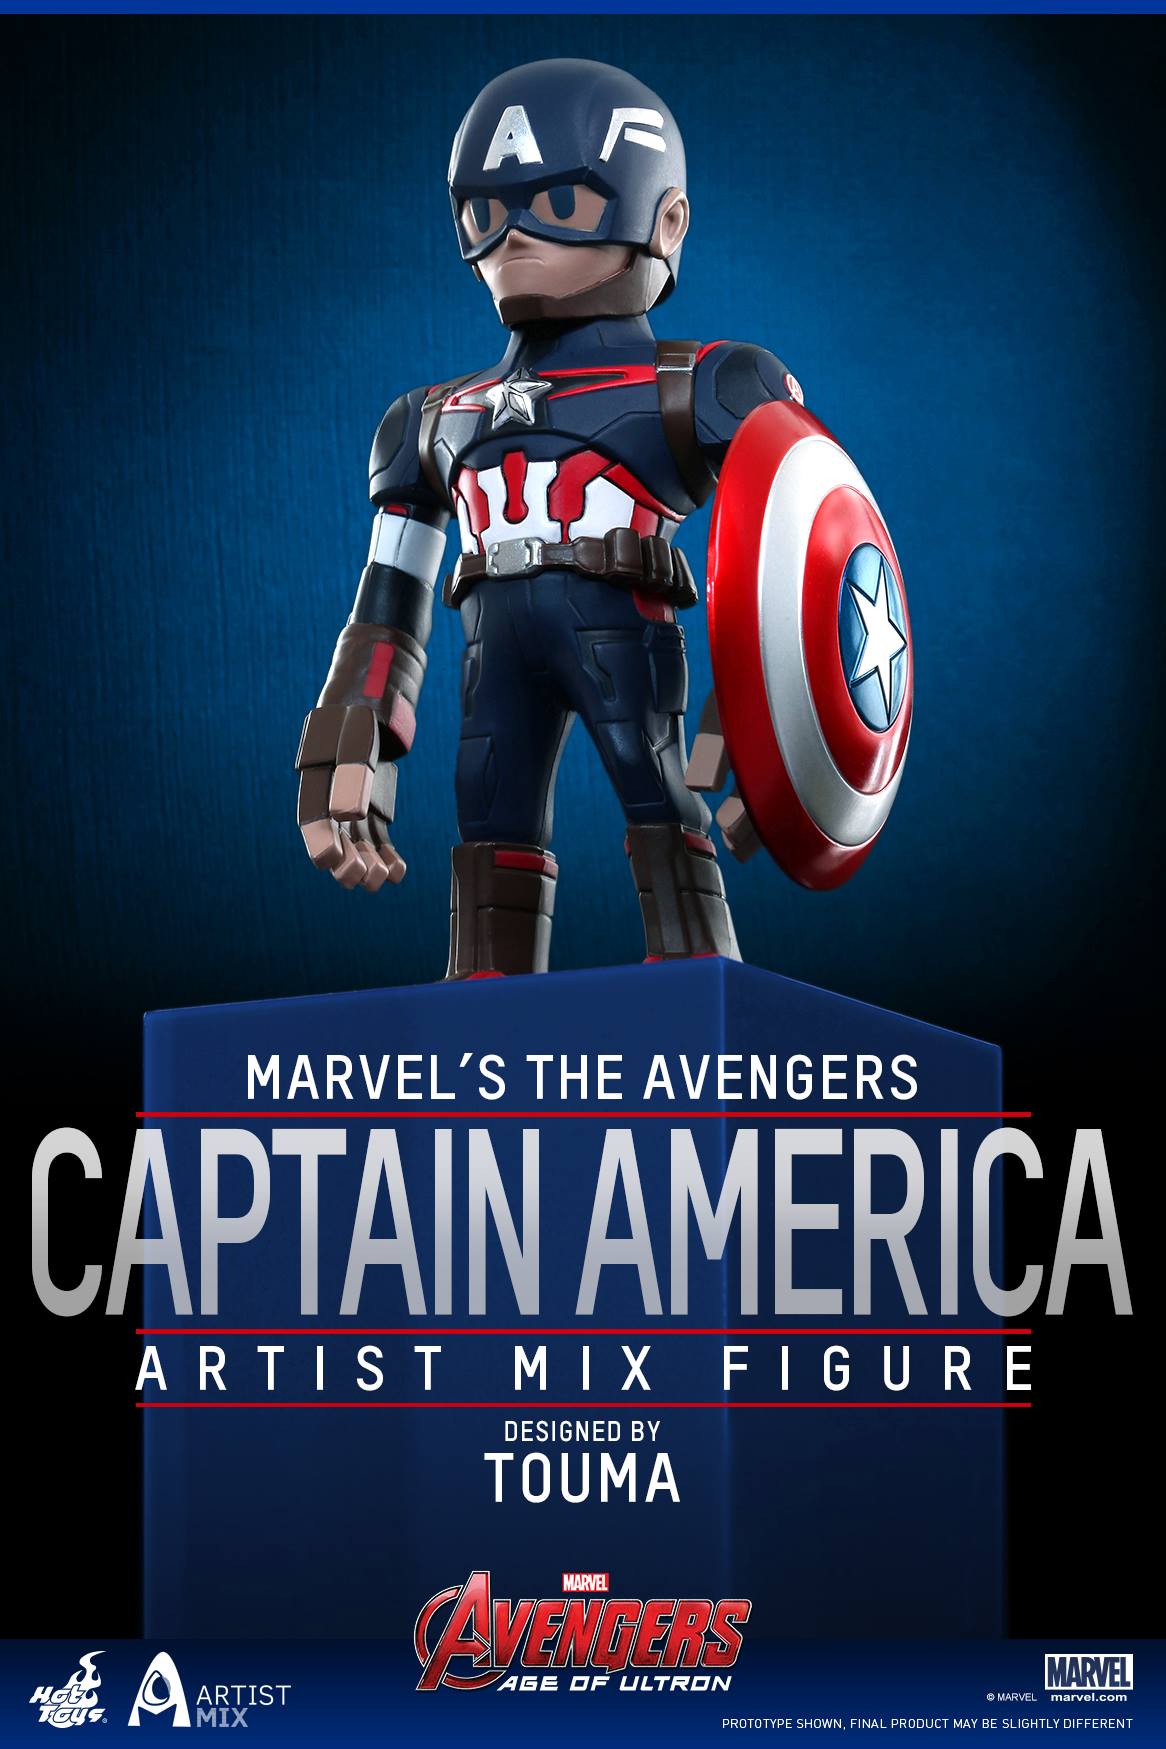 Avengers: Age of Ultron Artist Mix Figures 